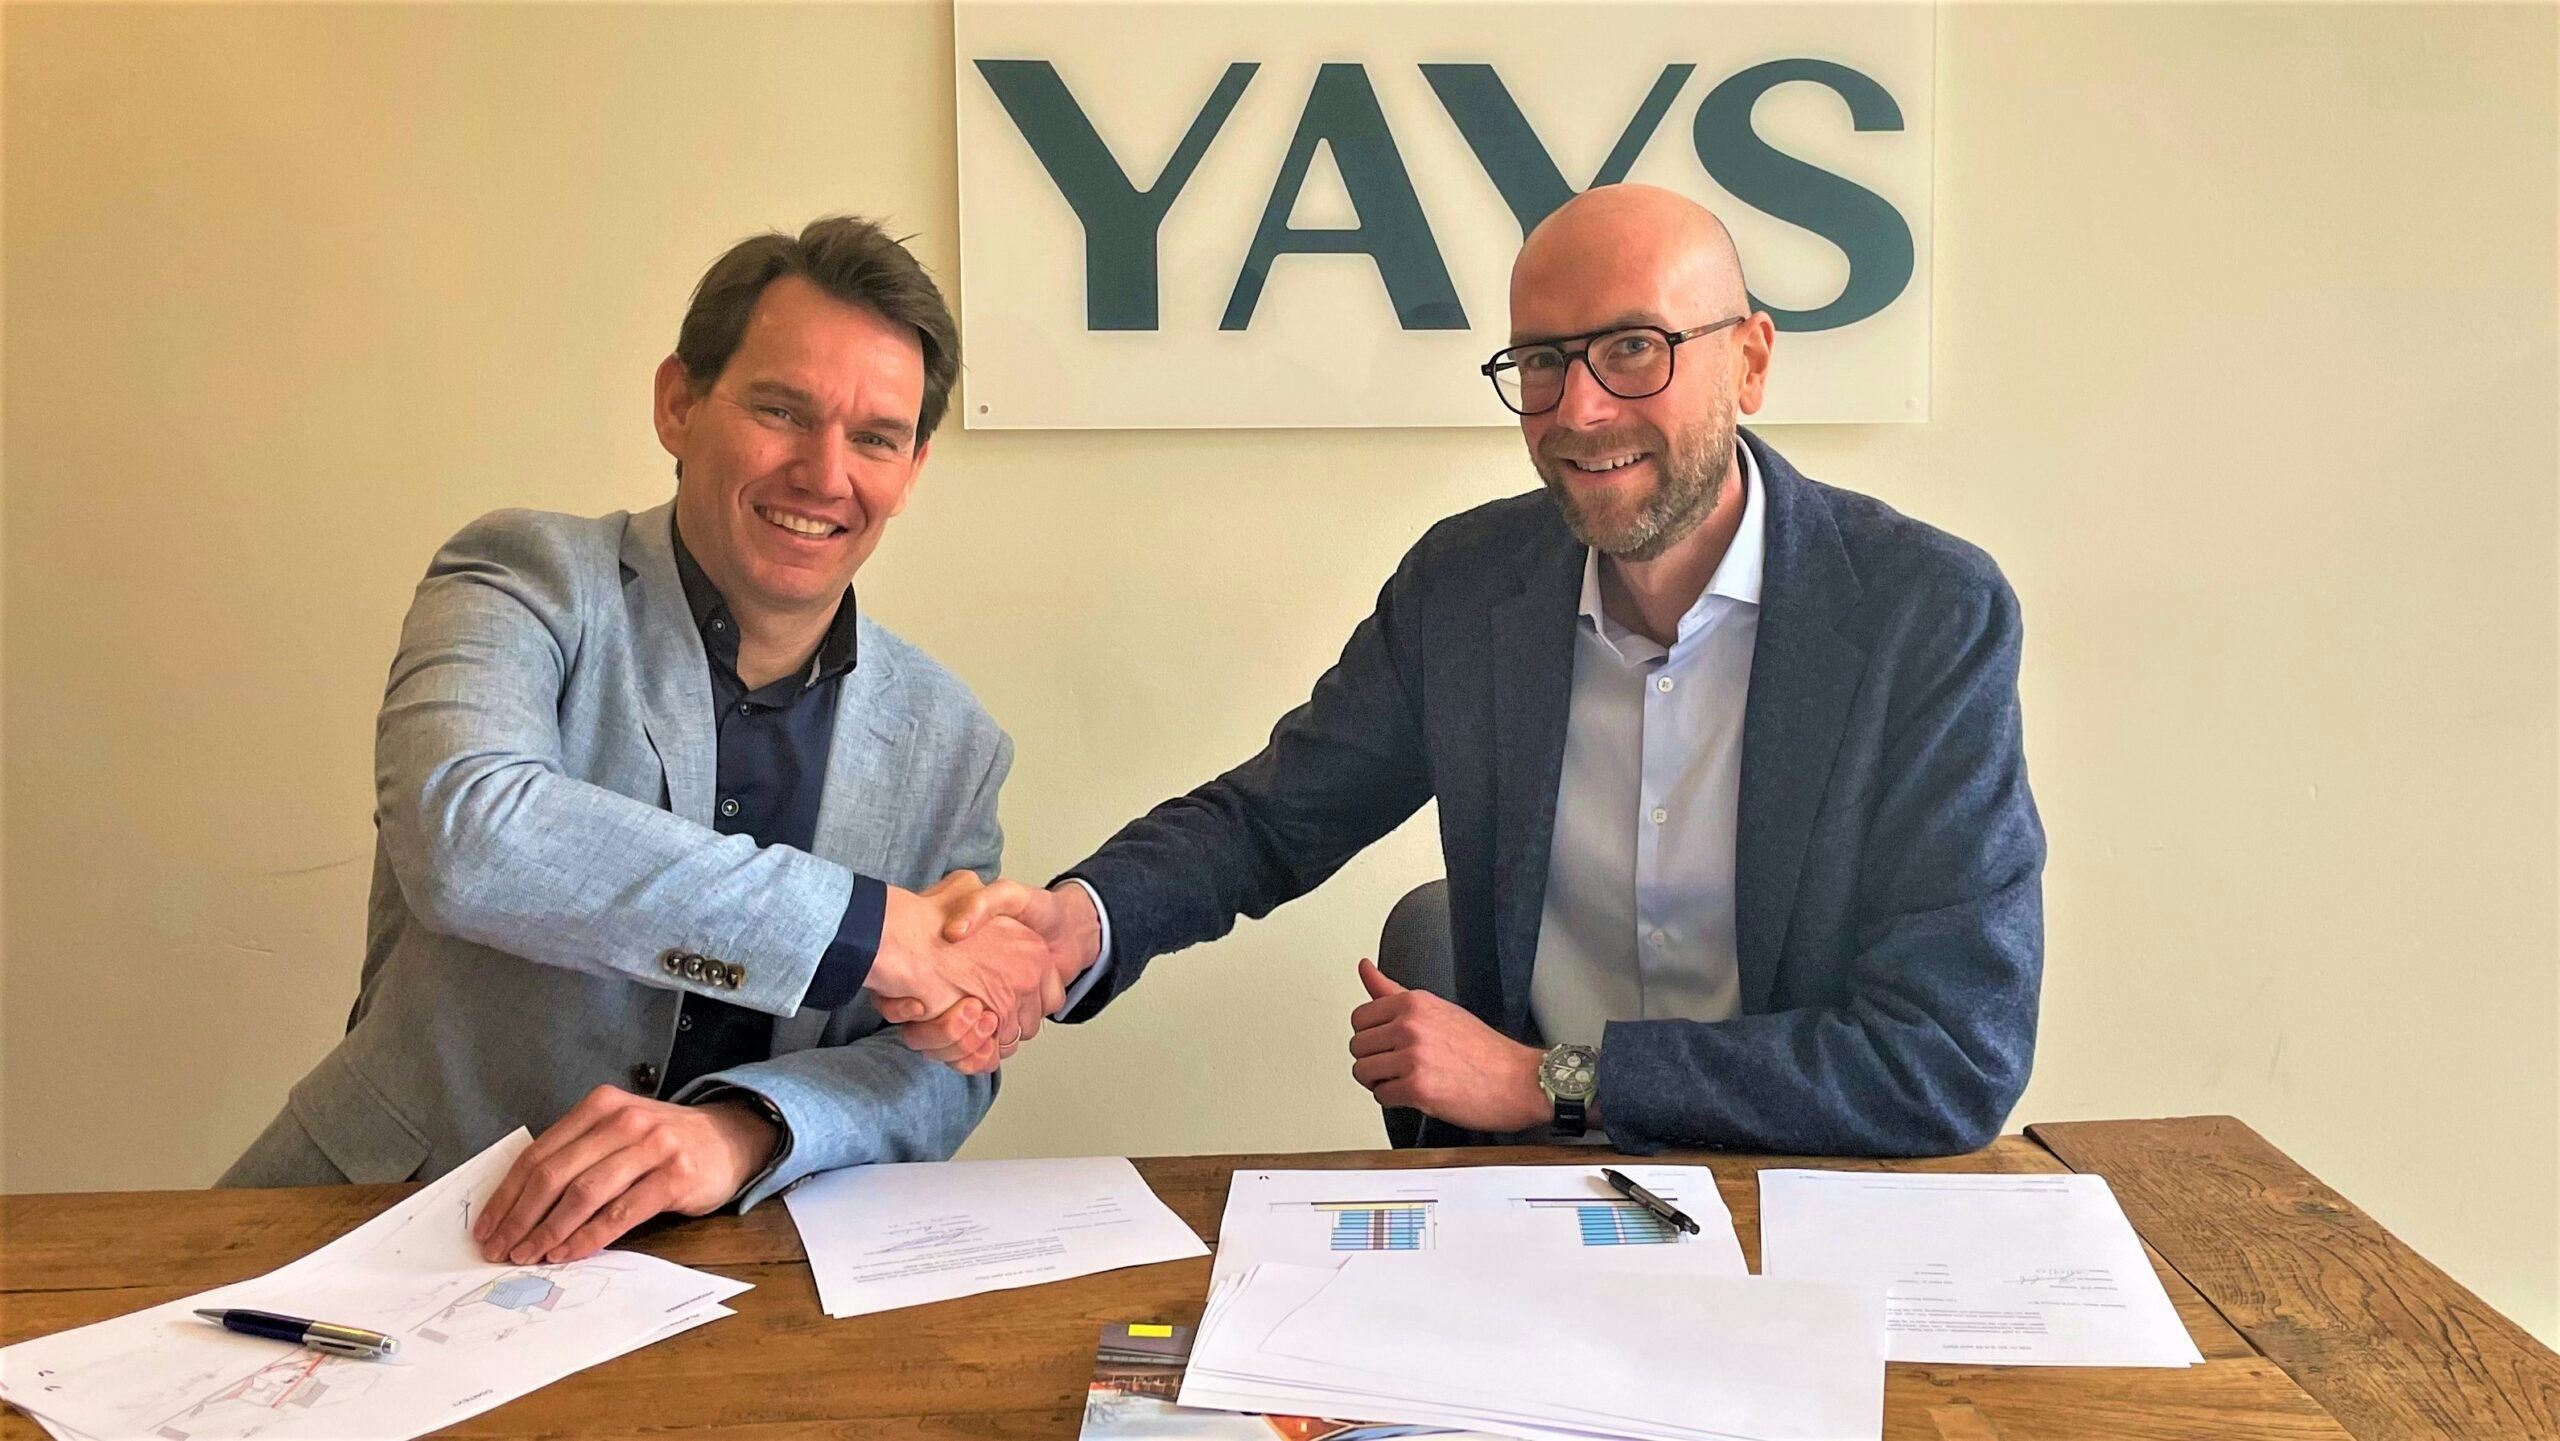 Yays tekent voor nieuwe extended stay-locatie Amsterdam-Noord